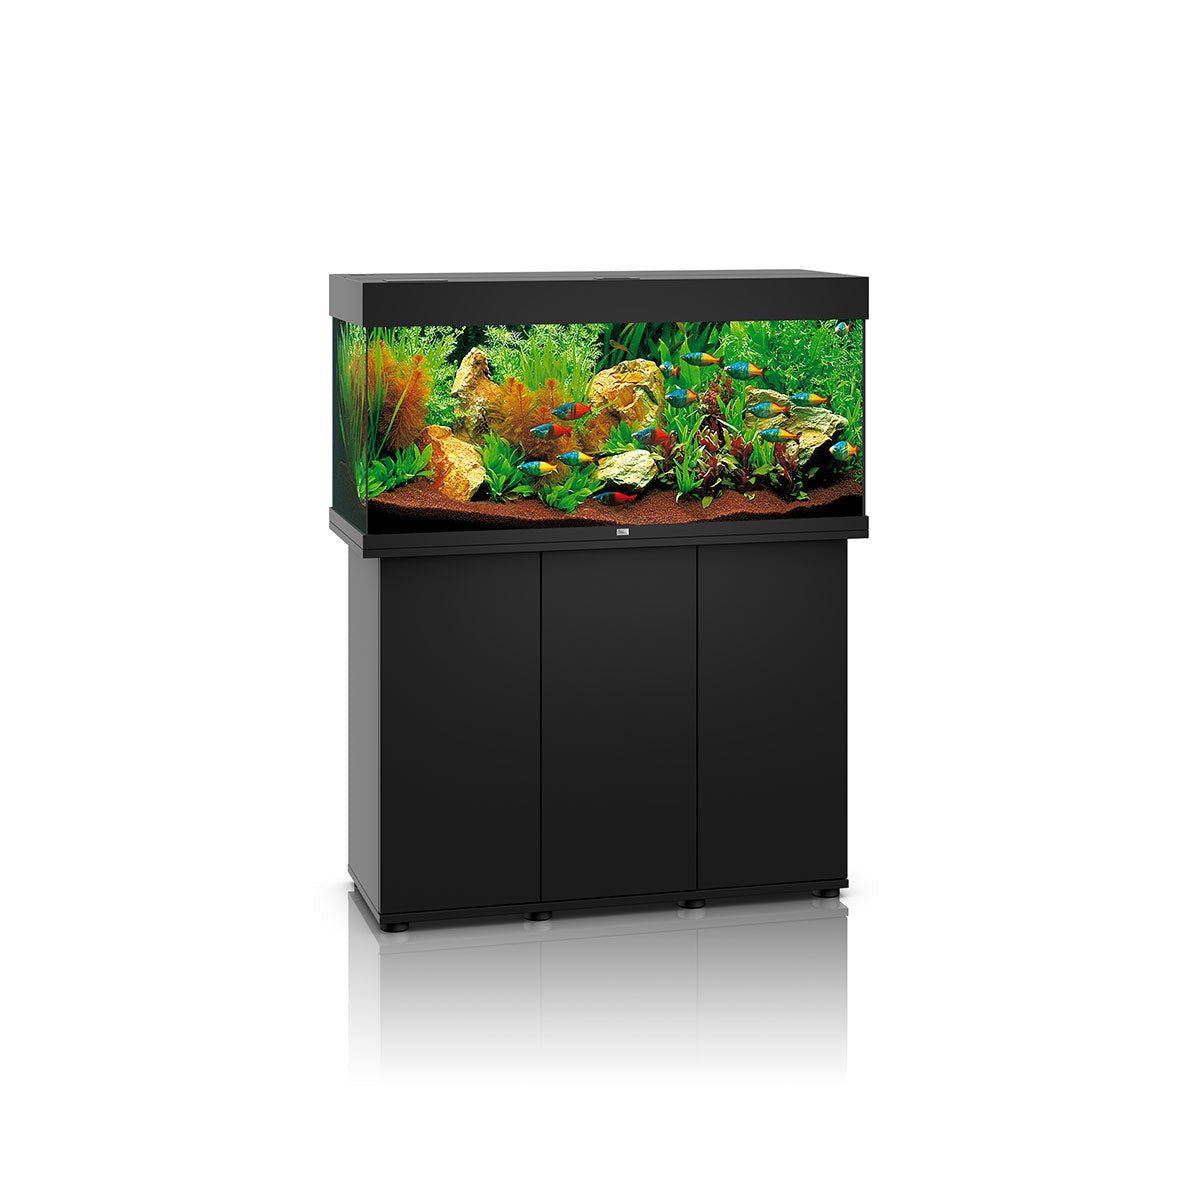 Juwel Rio 180 LED Aquarium and Cabinet (Black) - Charterhouse Aquatics